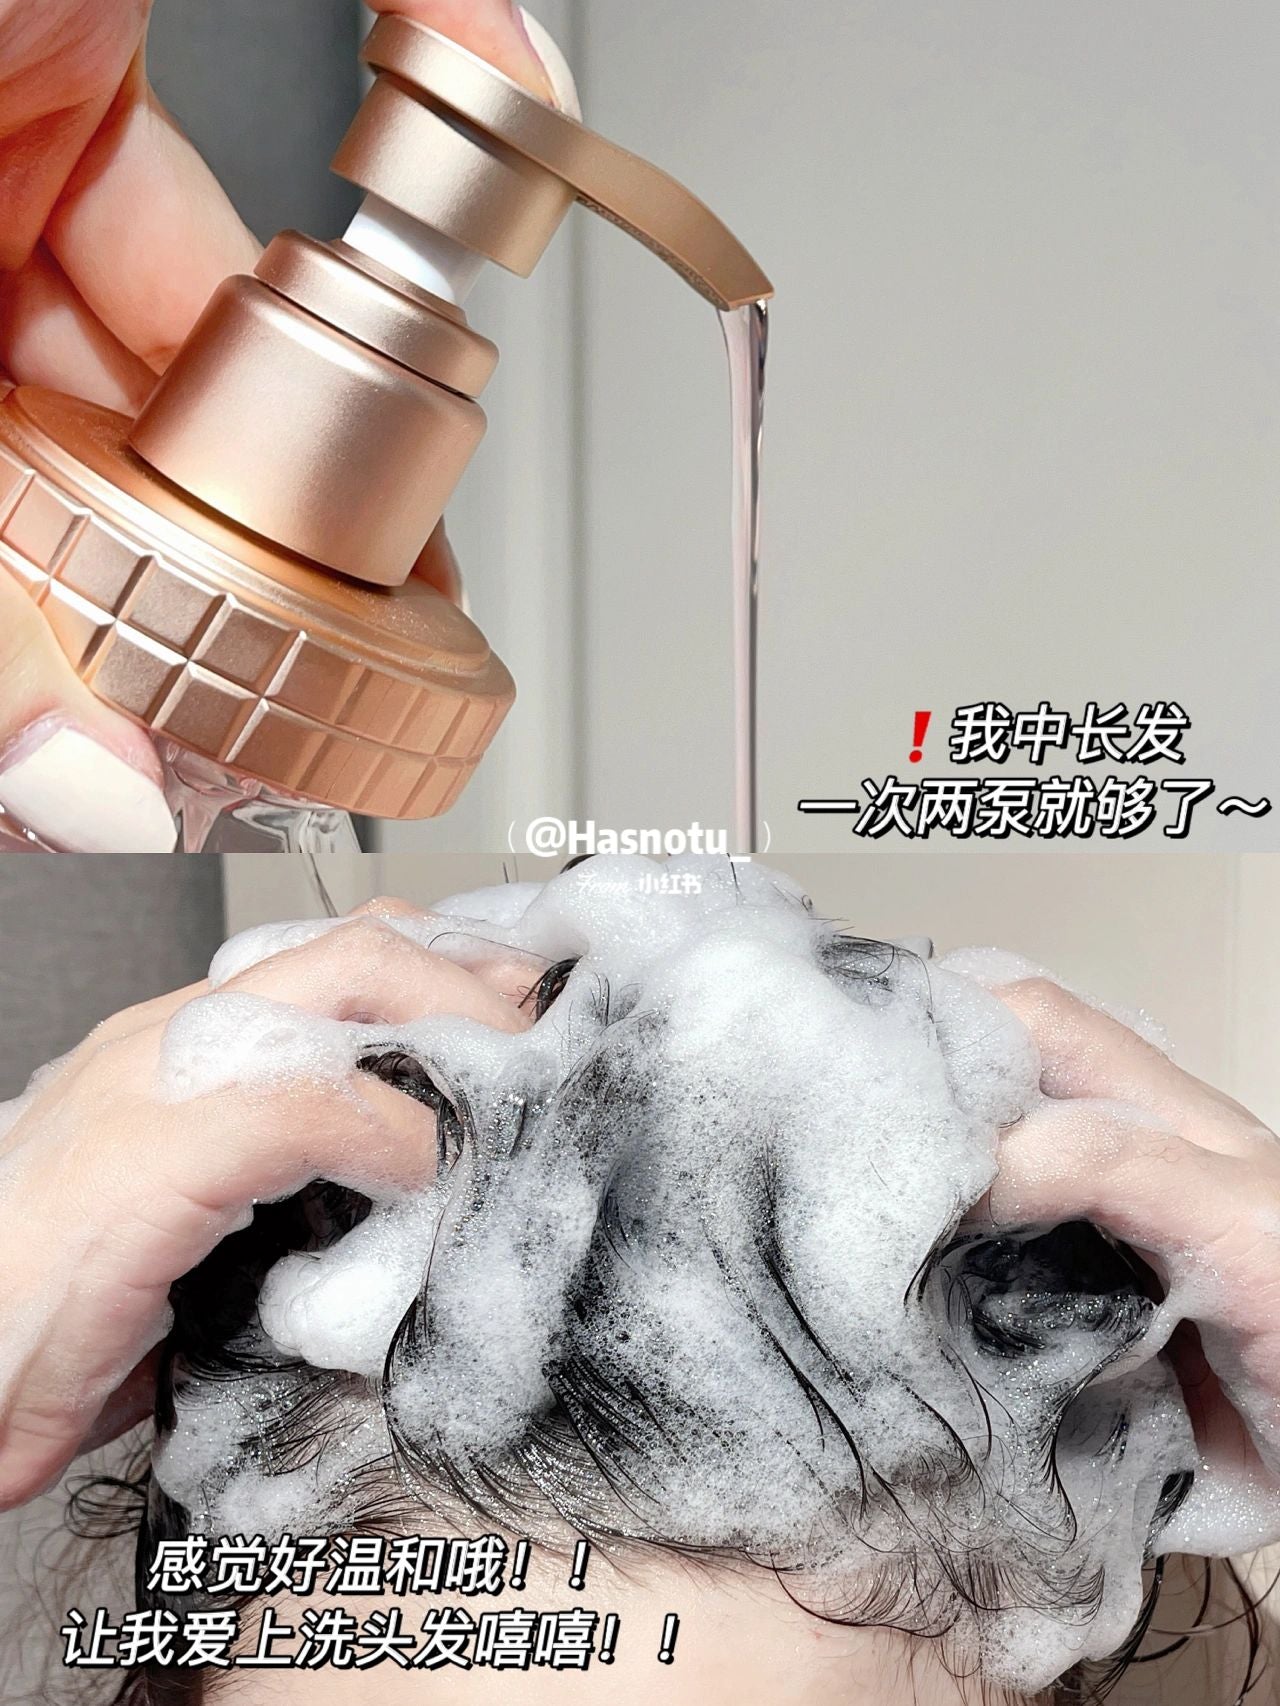 Japan &Honey Surplus Shine Repairing Conditioner&Shampoos 445g/440g 日本安蒂花子盈润光泽修复洗发水护发素